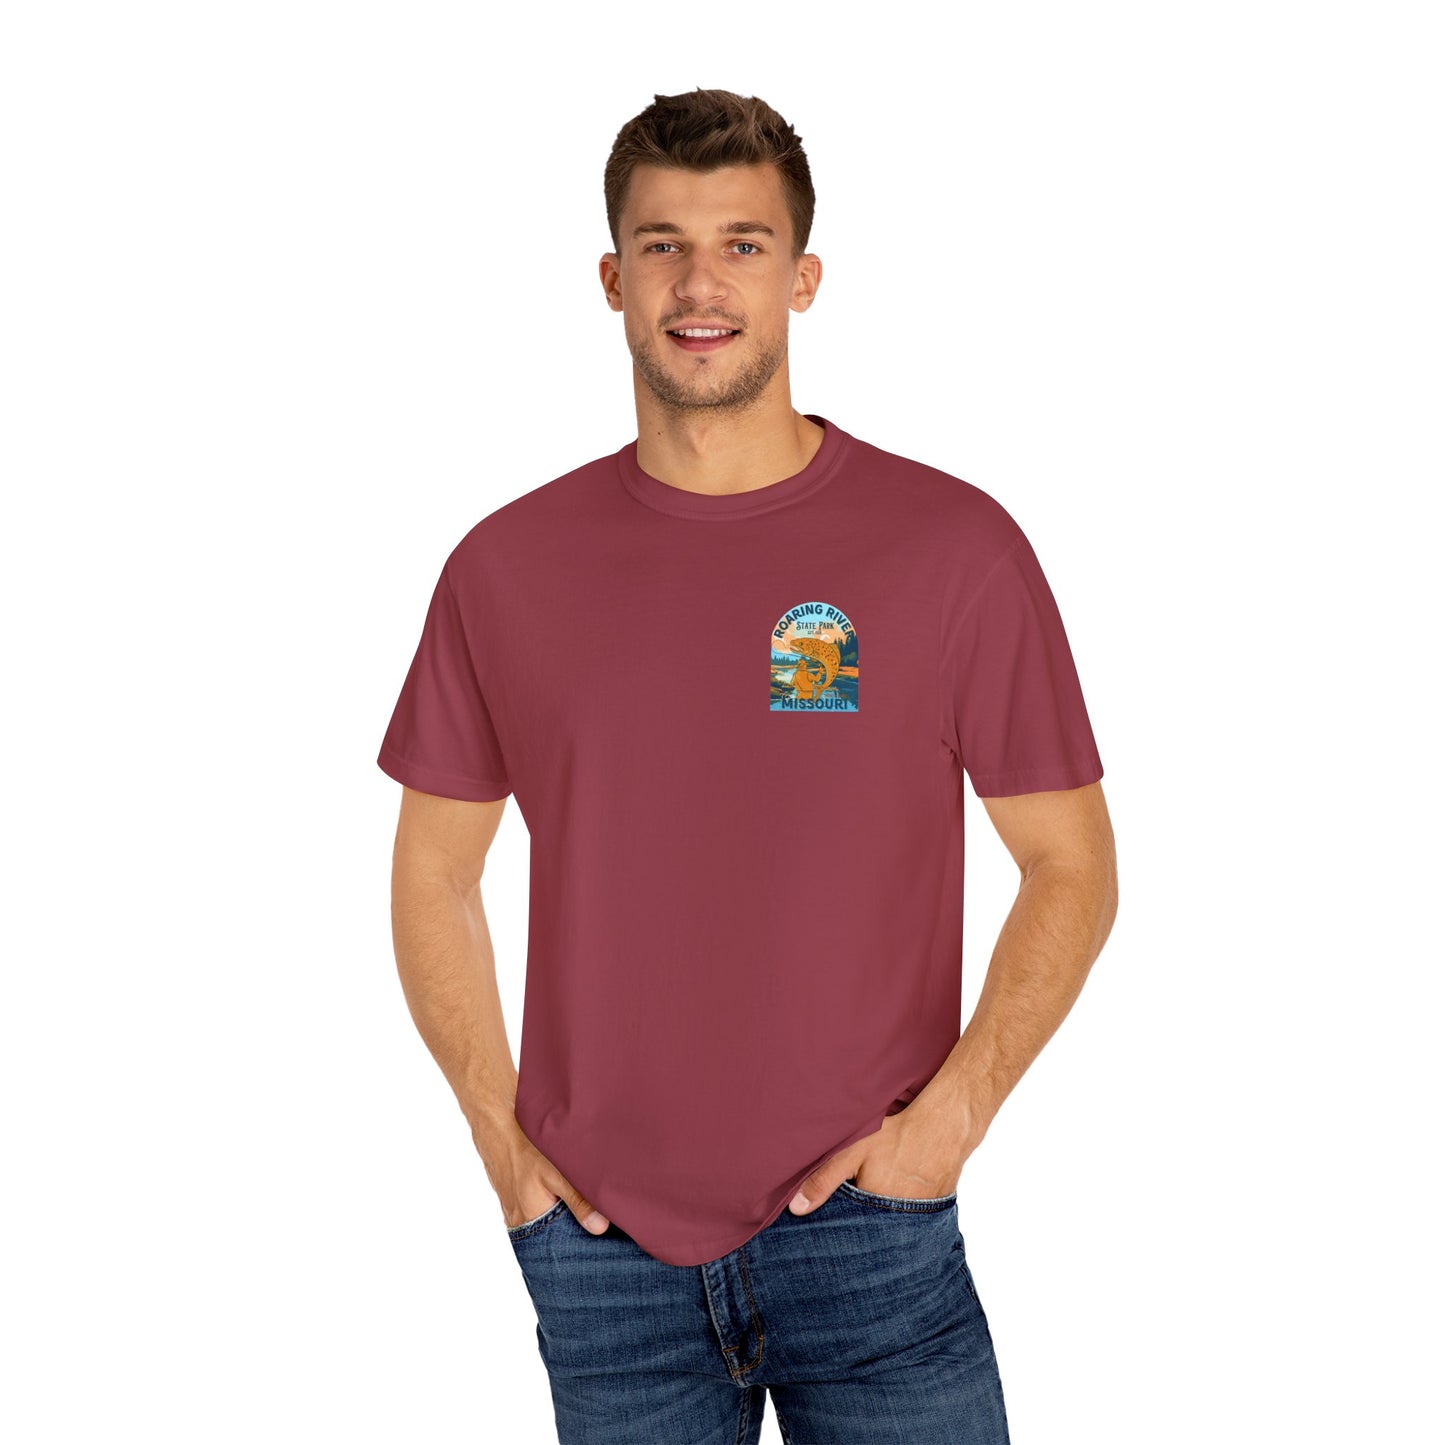 Roaring River | Garment-Dyed T-shirt | Missouri State Park